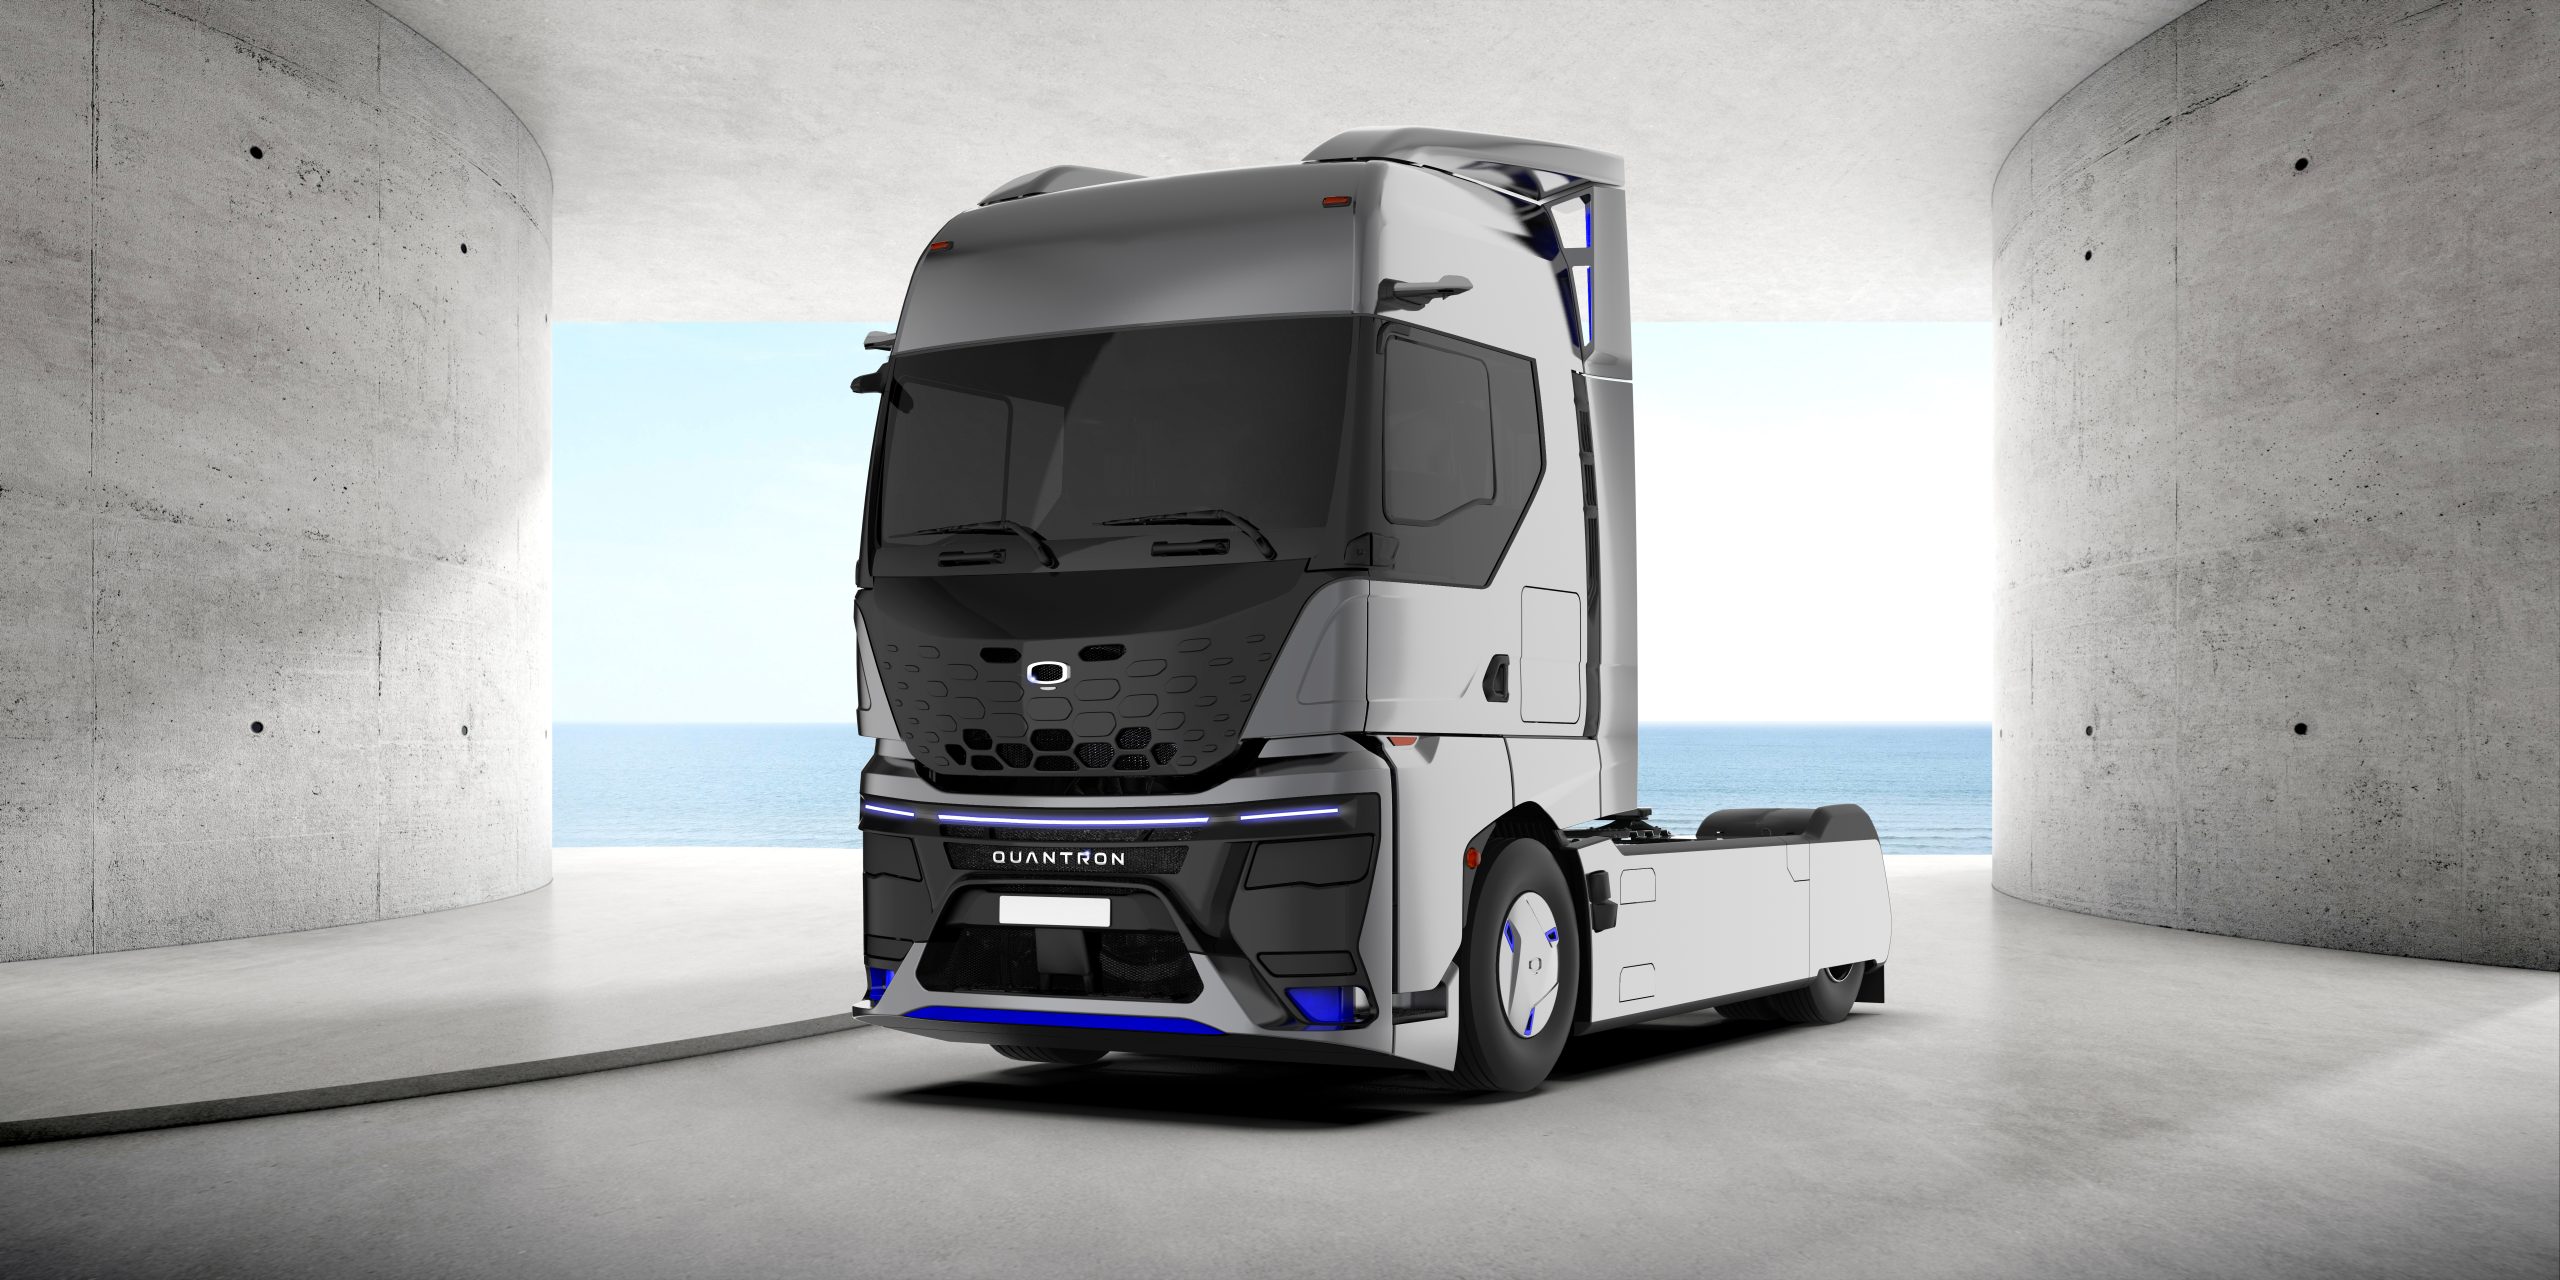 IAA Transportation World Premieres QUANTRON unveils longest-range hydrogen and electric trucks based on newly developed platforms